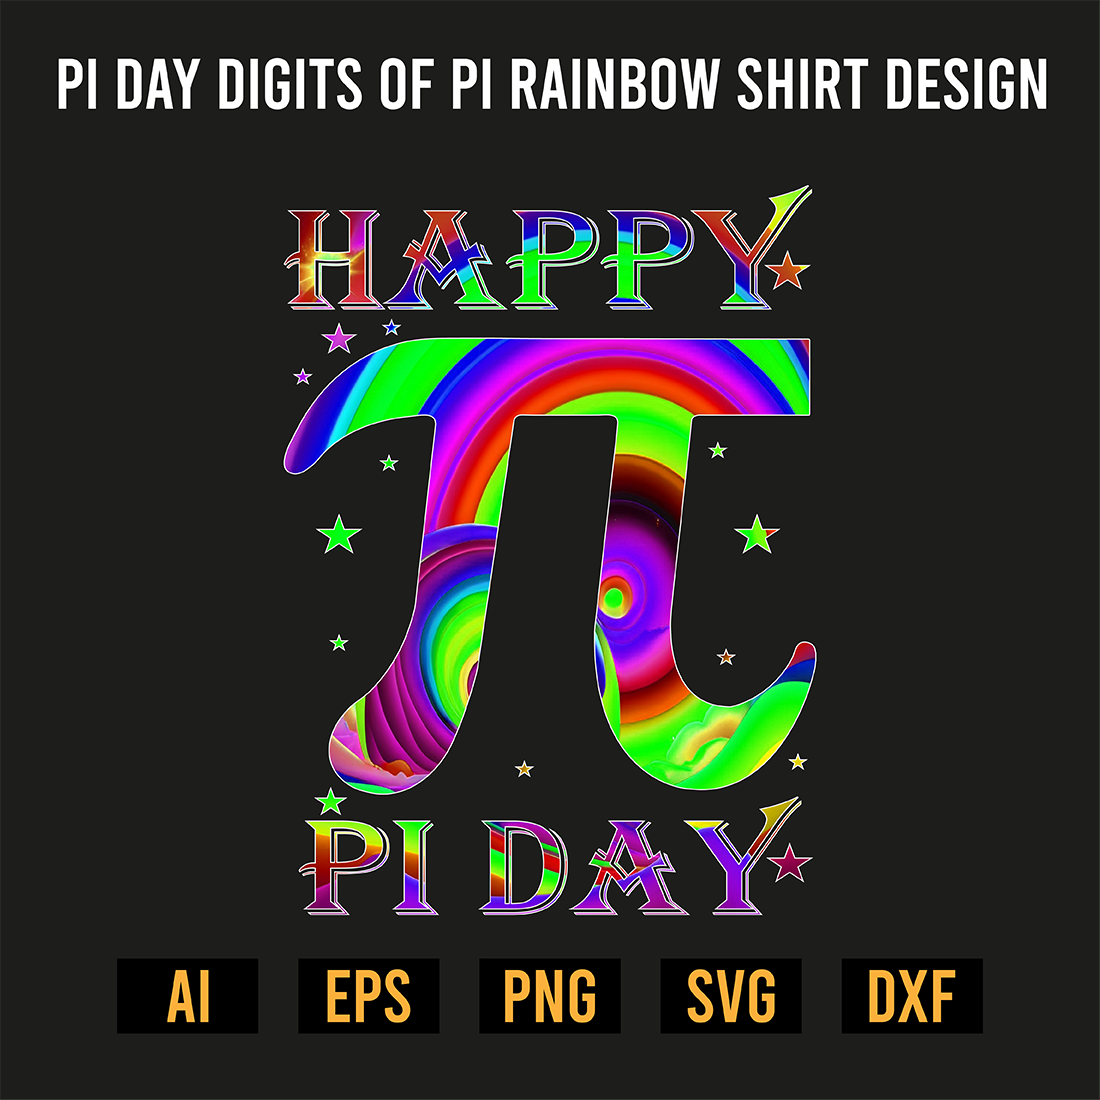 Pi Day Digits of Pi Rainbow Shirt Design preview image.